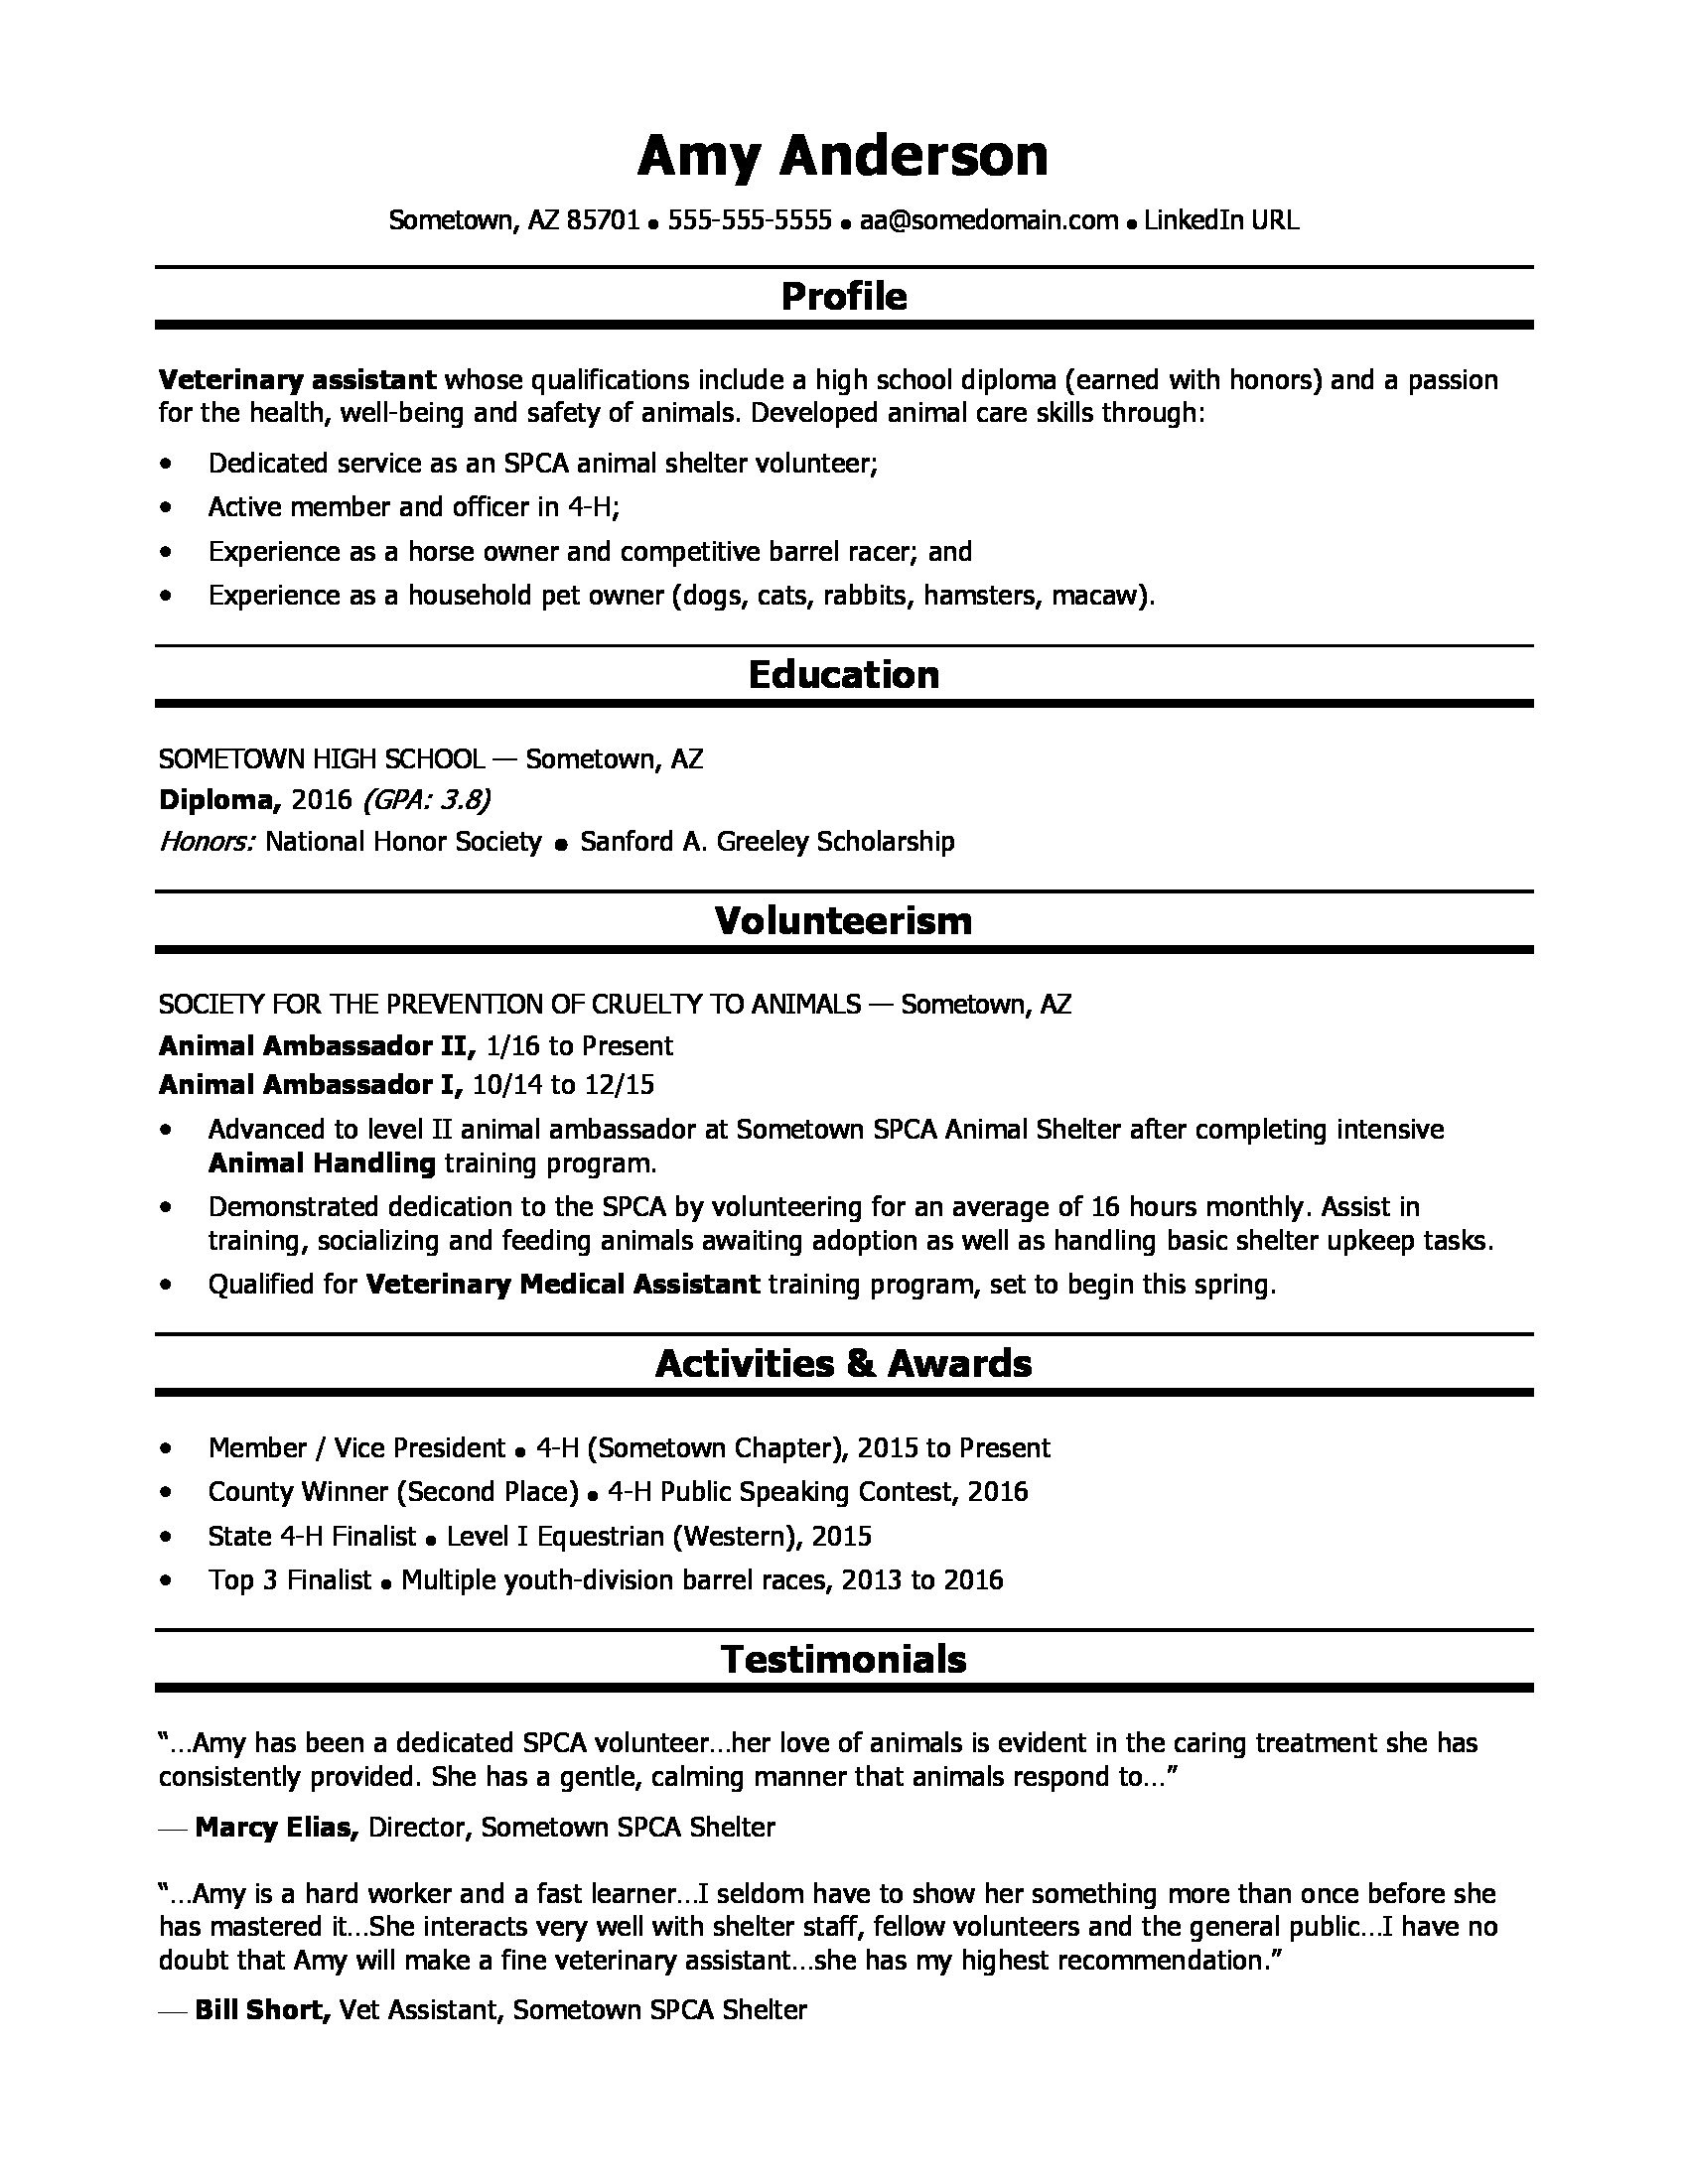 Sample Of A Animal Control Resume High School Grad Resume Sample Monster.com